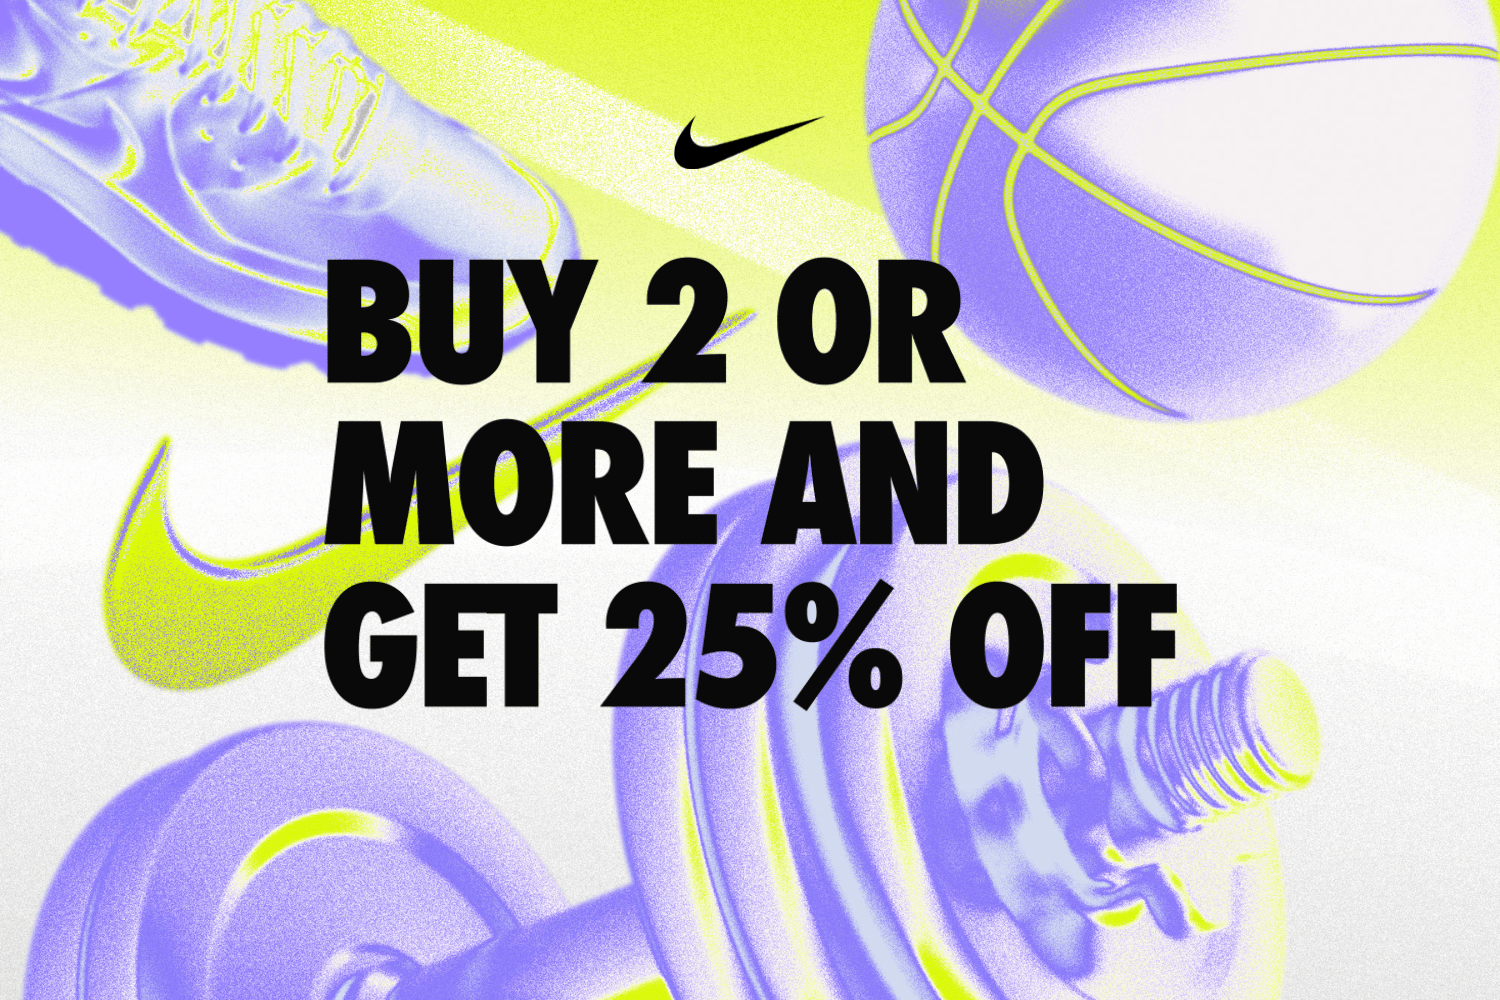 Bundle-Angebot bei Nike mit 25% Rabatt